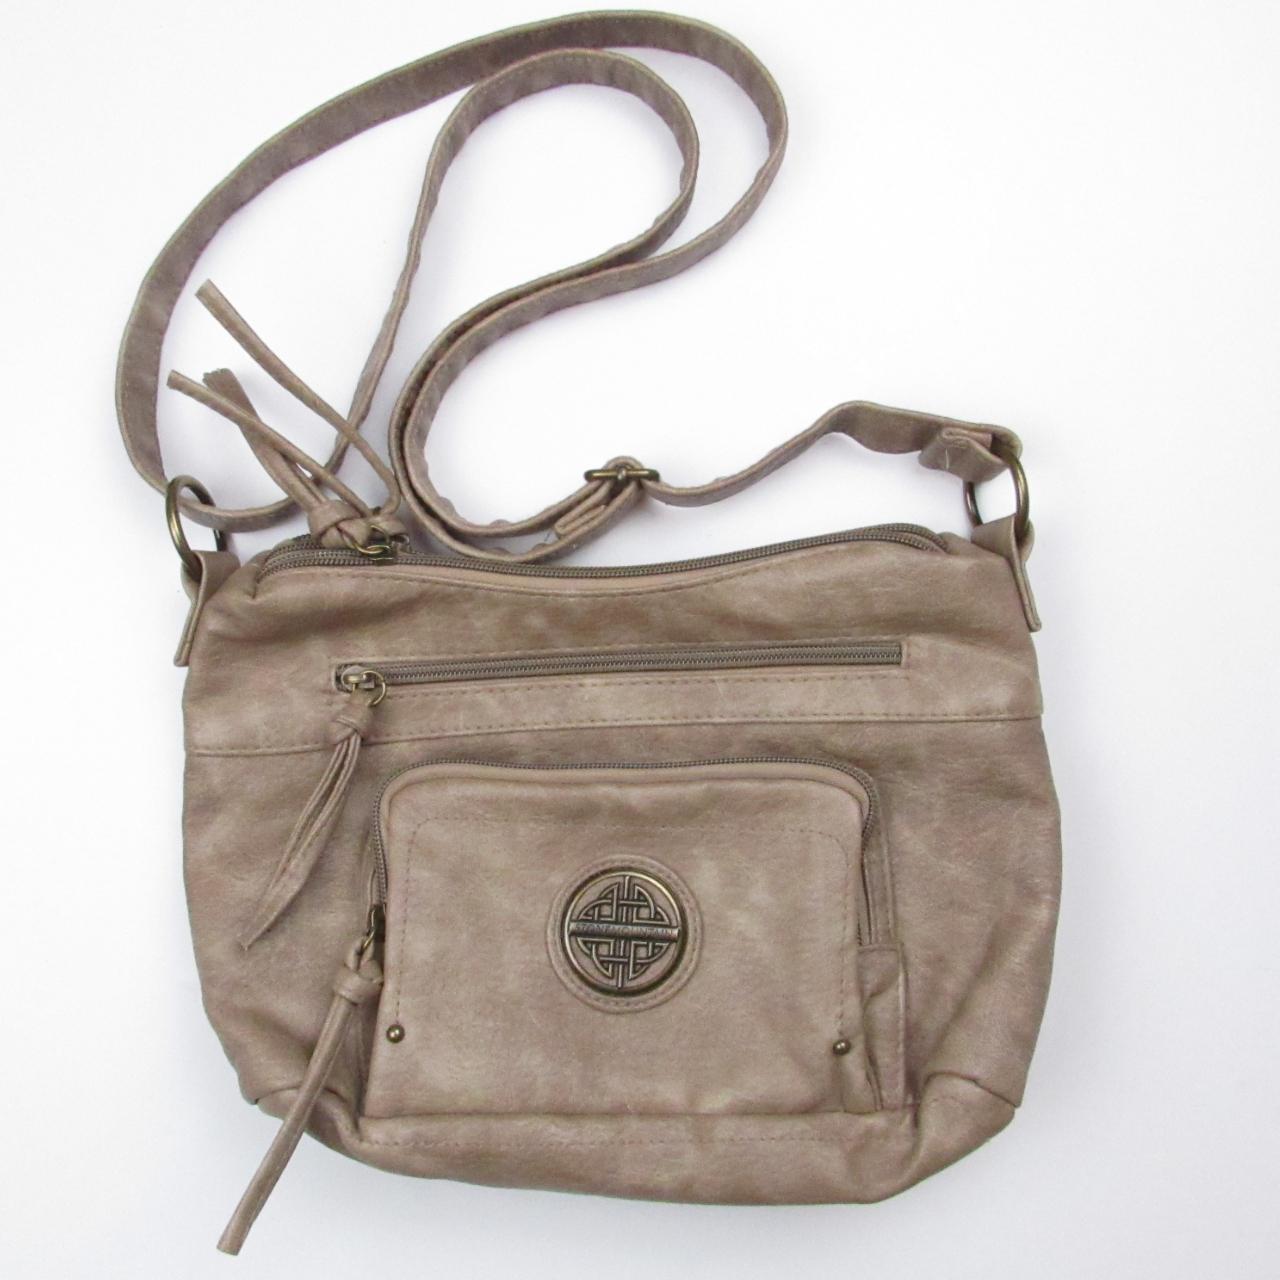 Stone mountain leather bag - Gem